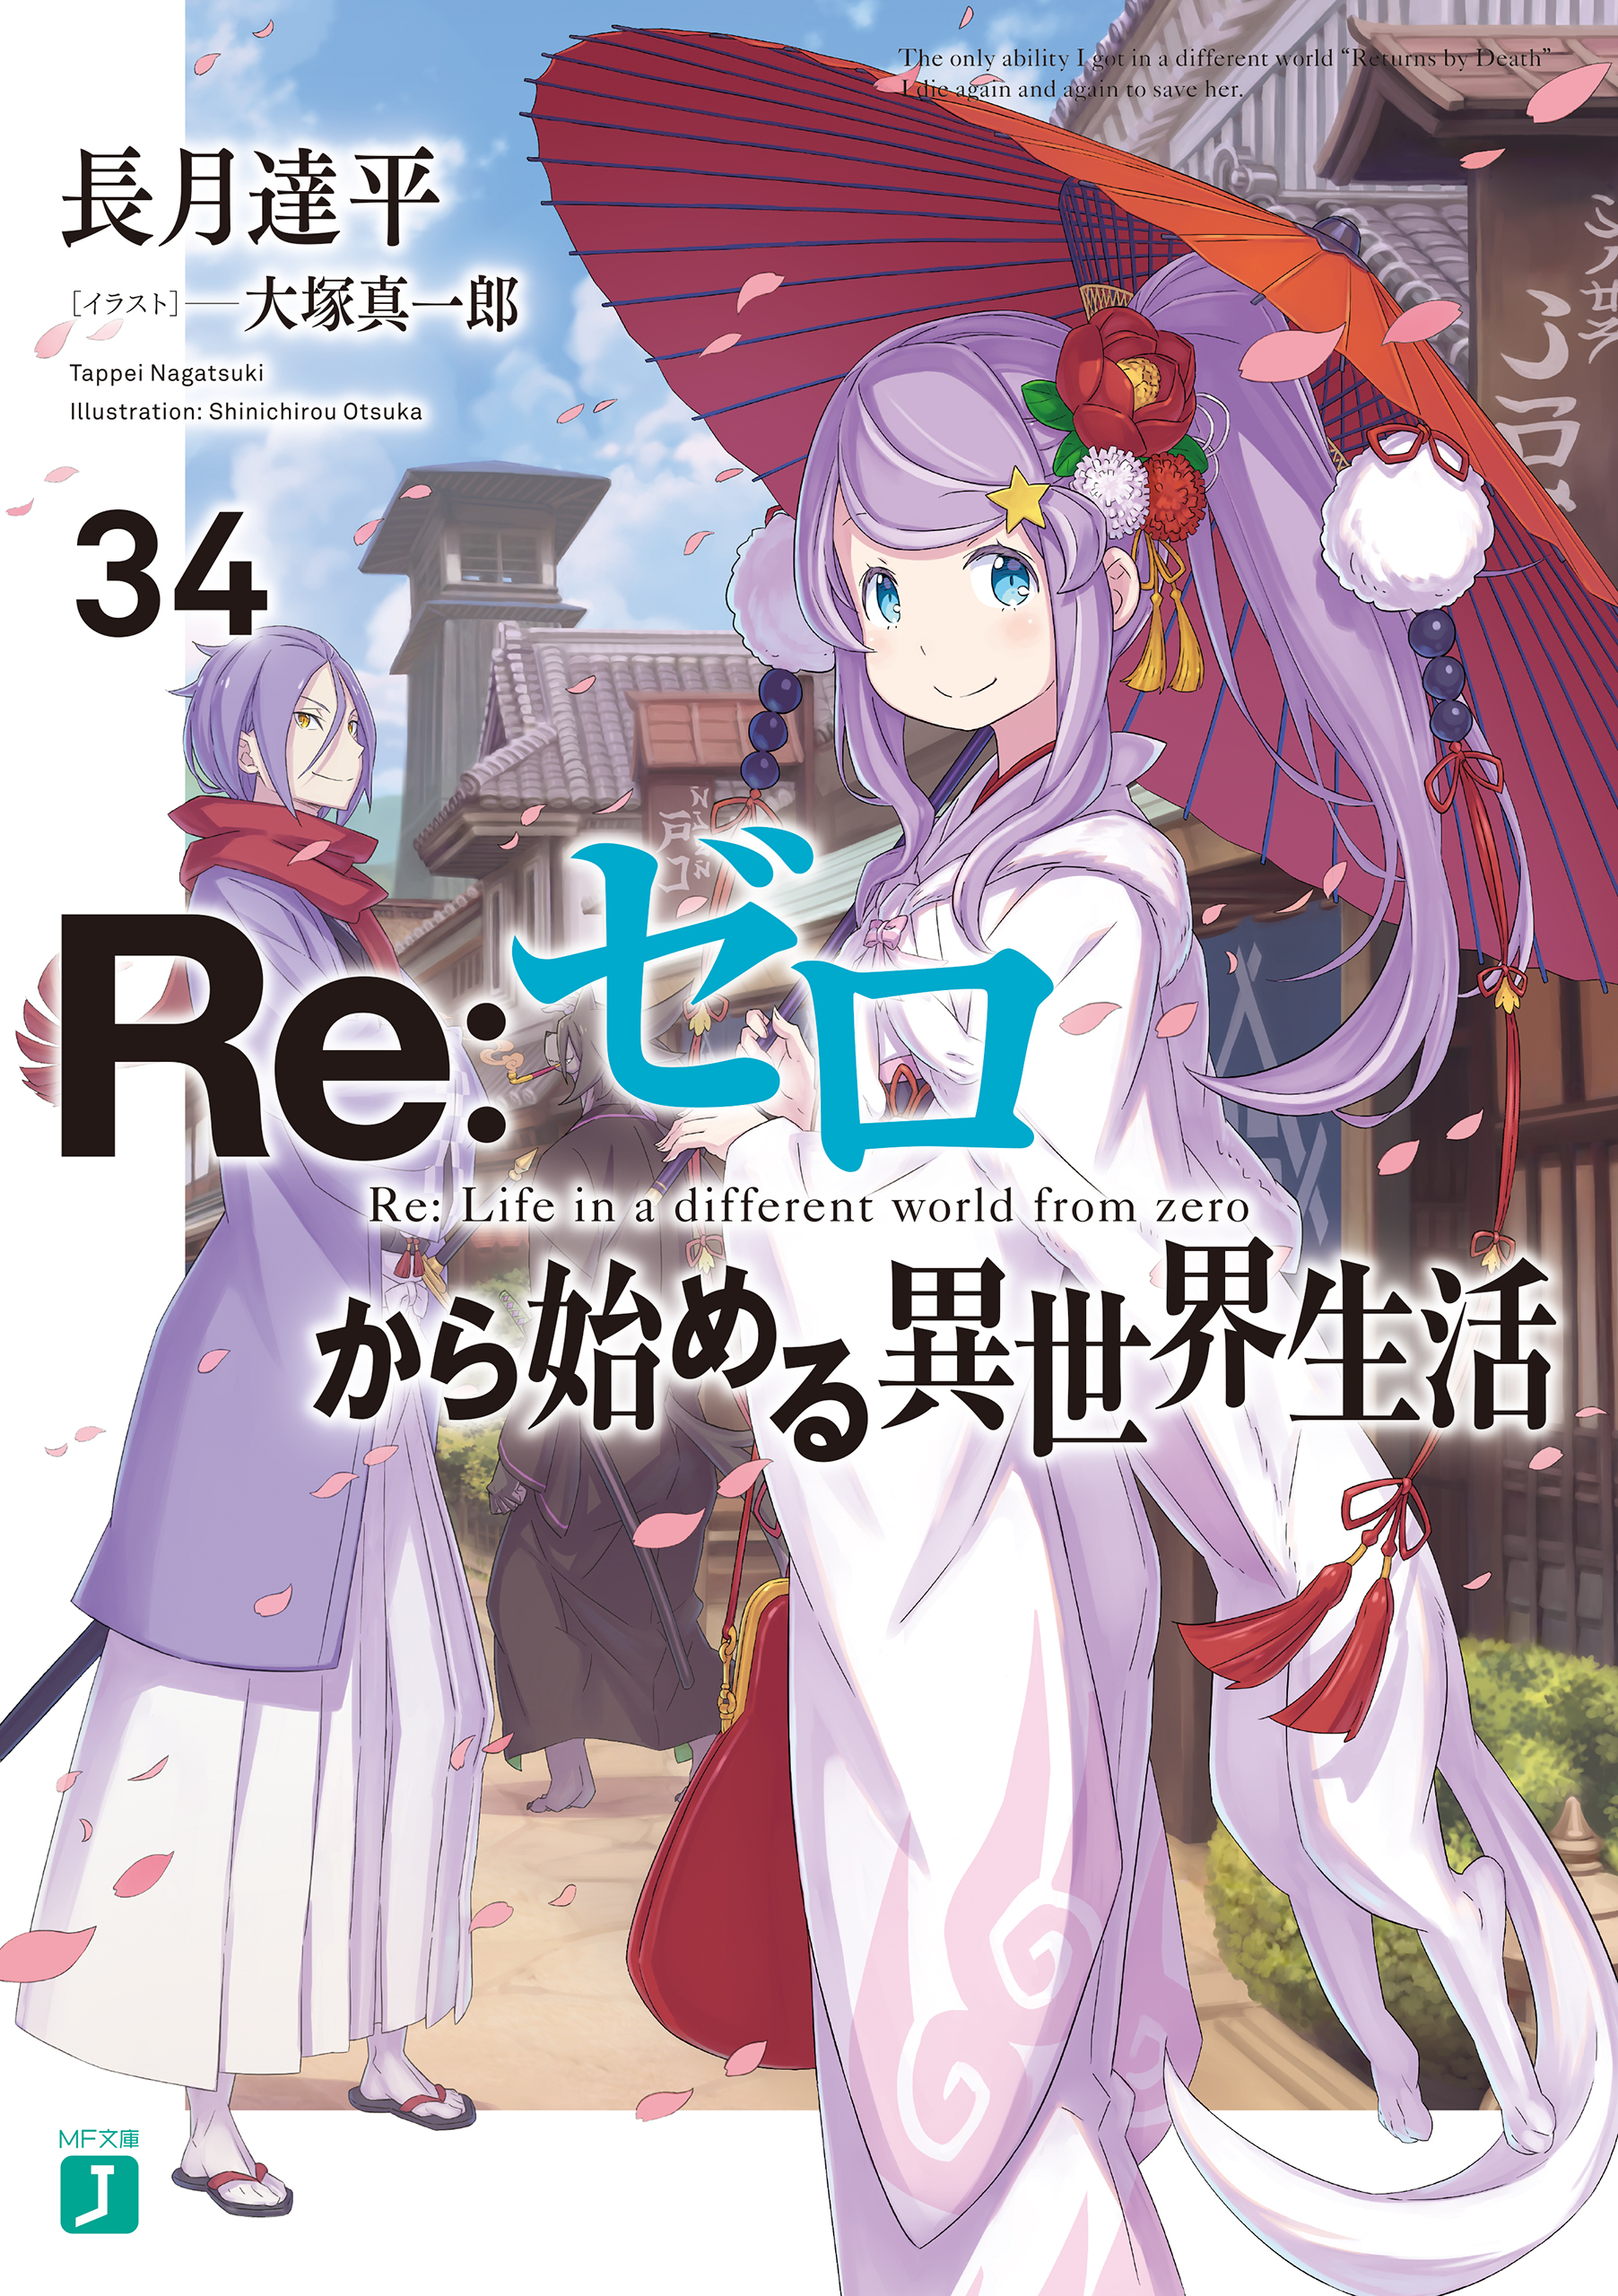 re:Zero Anime Manga Season 2 Poster A3 A4 5x7 Satin Matt Gloss